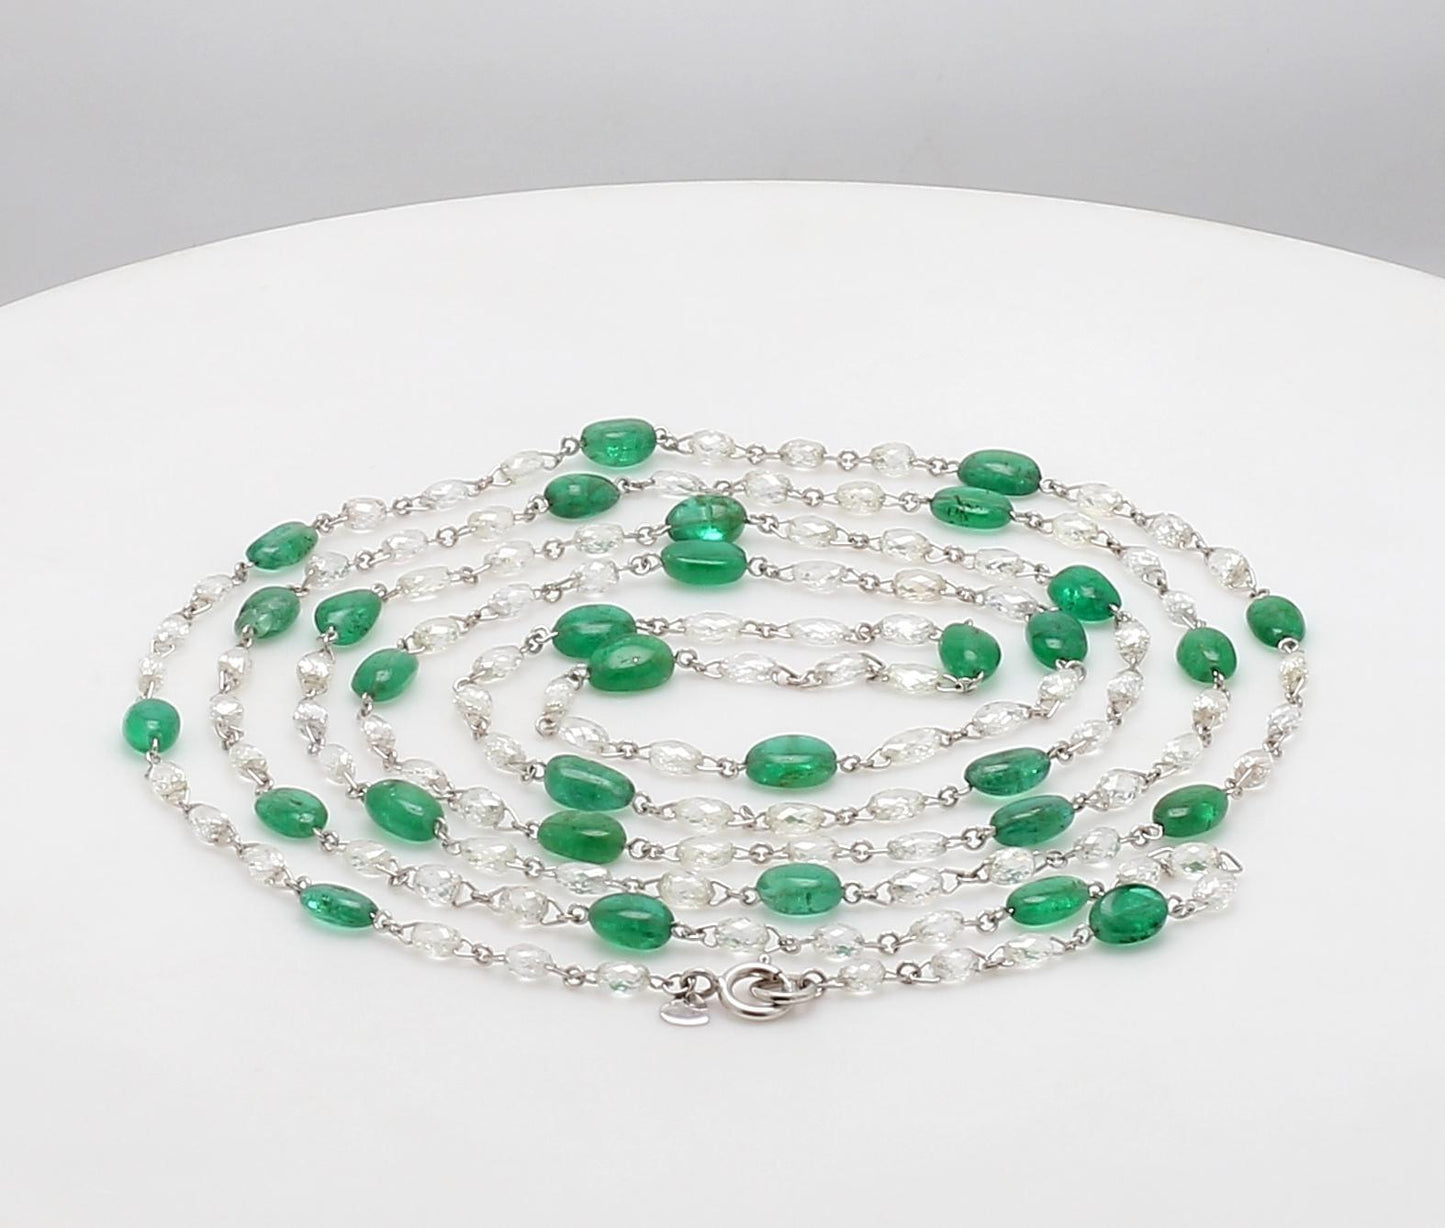 Diamond Briolette & Emerald Necklace